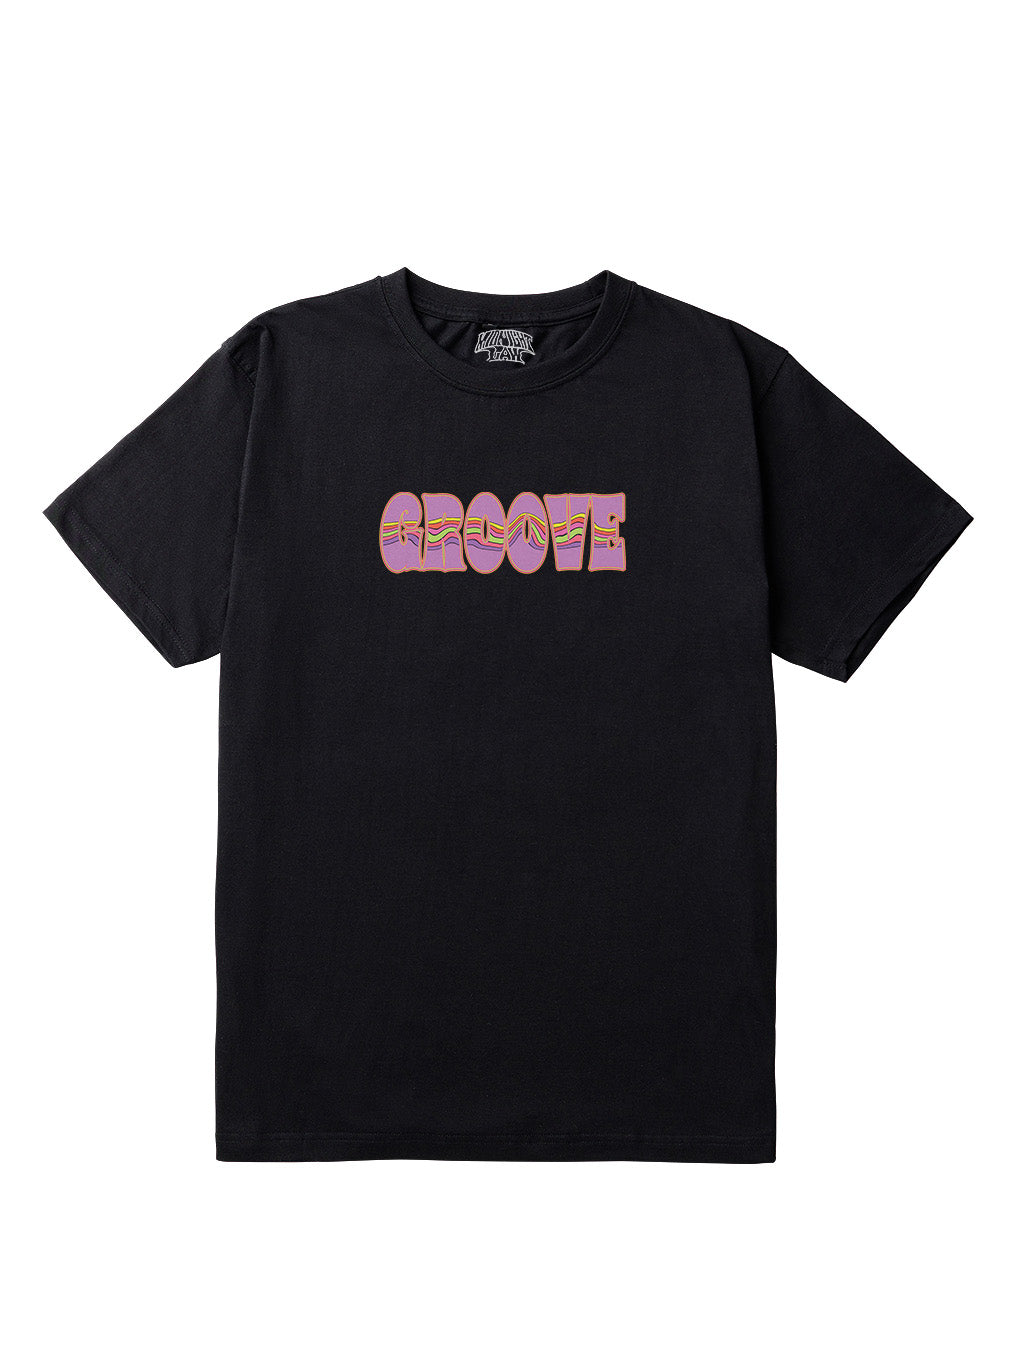 Groove T-Shirt